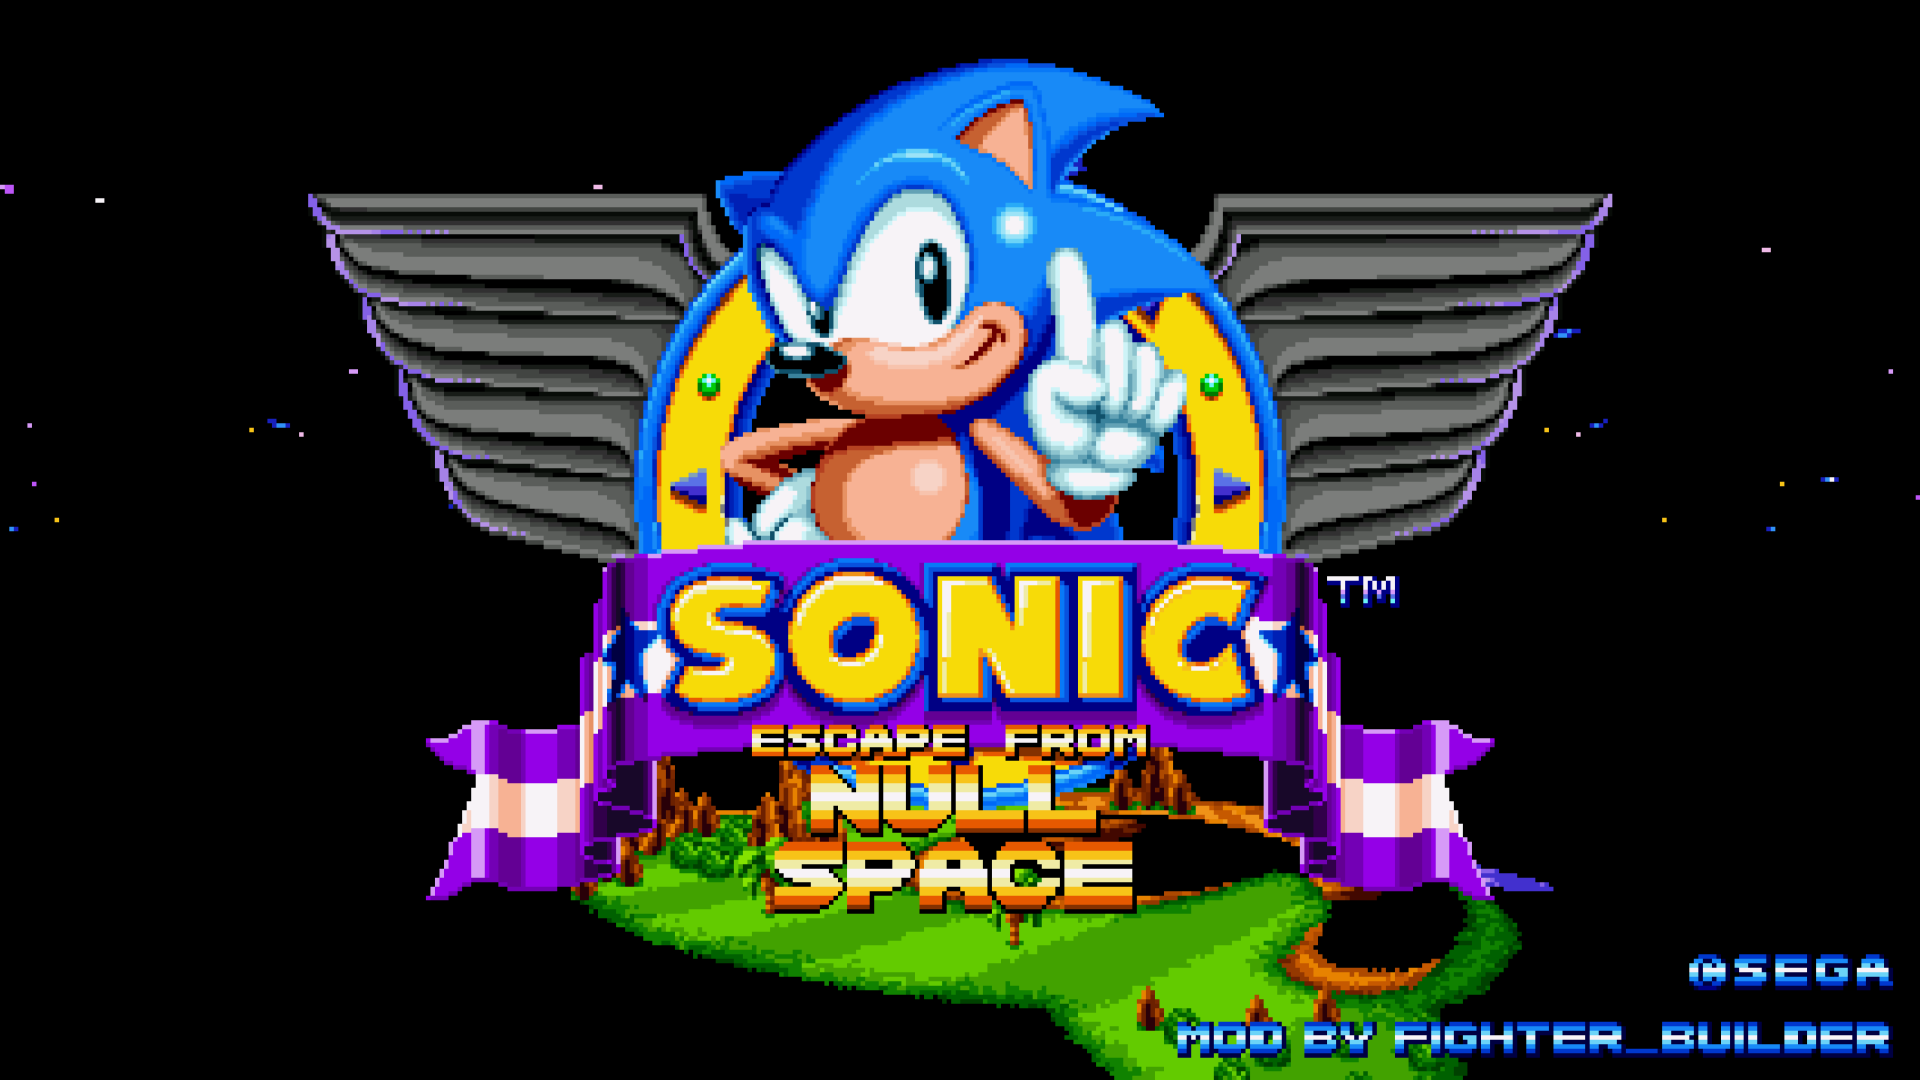 Amy Rose Mod Pack, Sonic Mania Modding Wiki